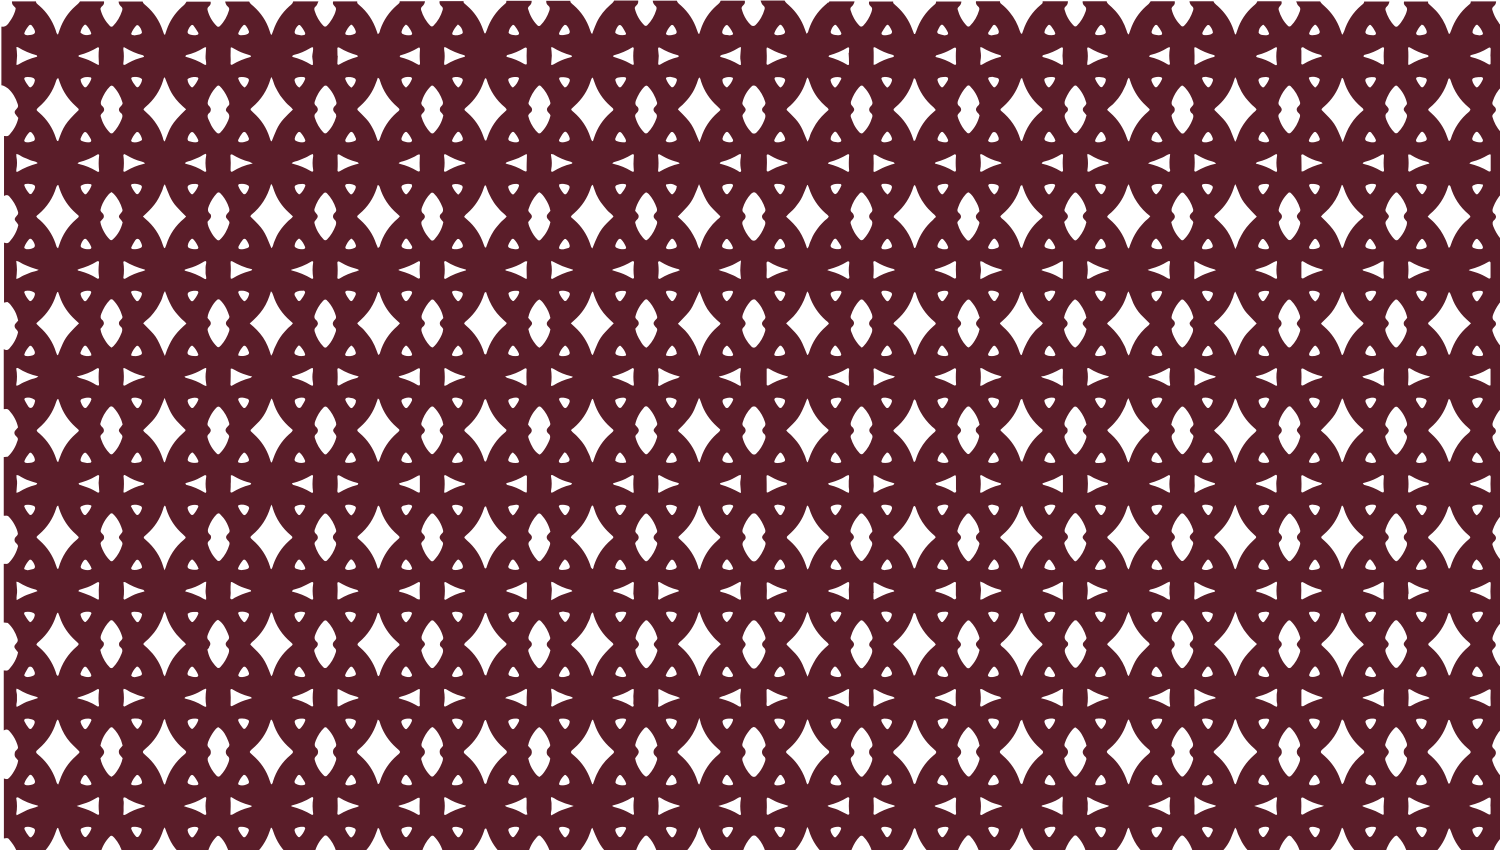 Parasoleil™ Eckleburg© pattern displayed with a burgundy color overlay